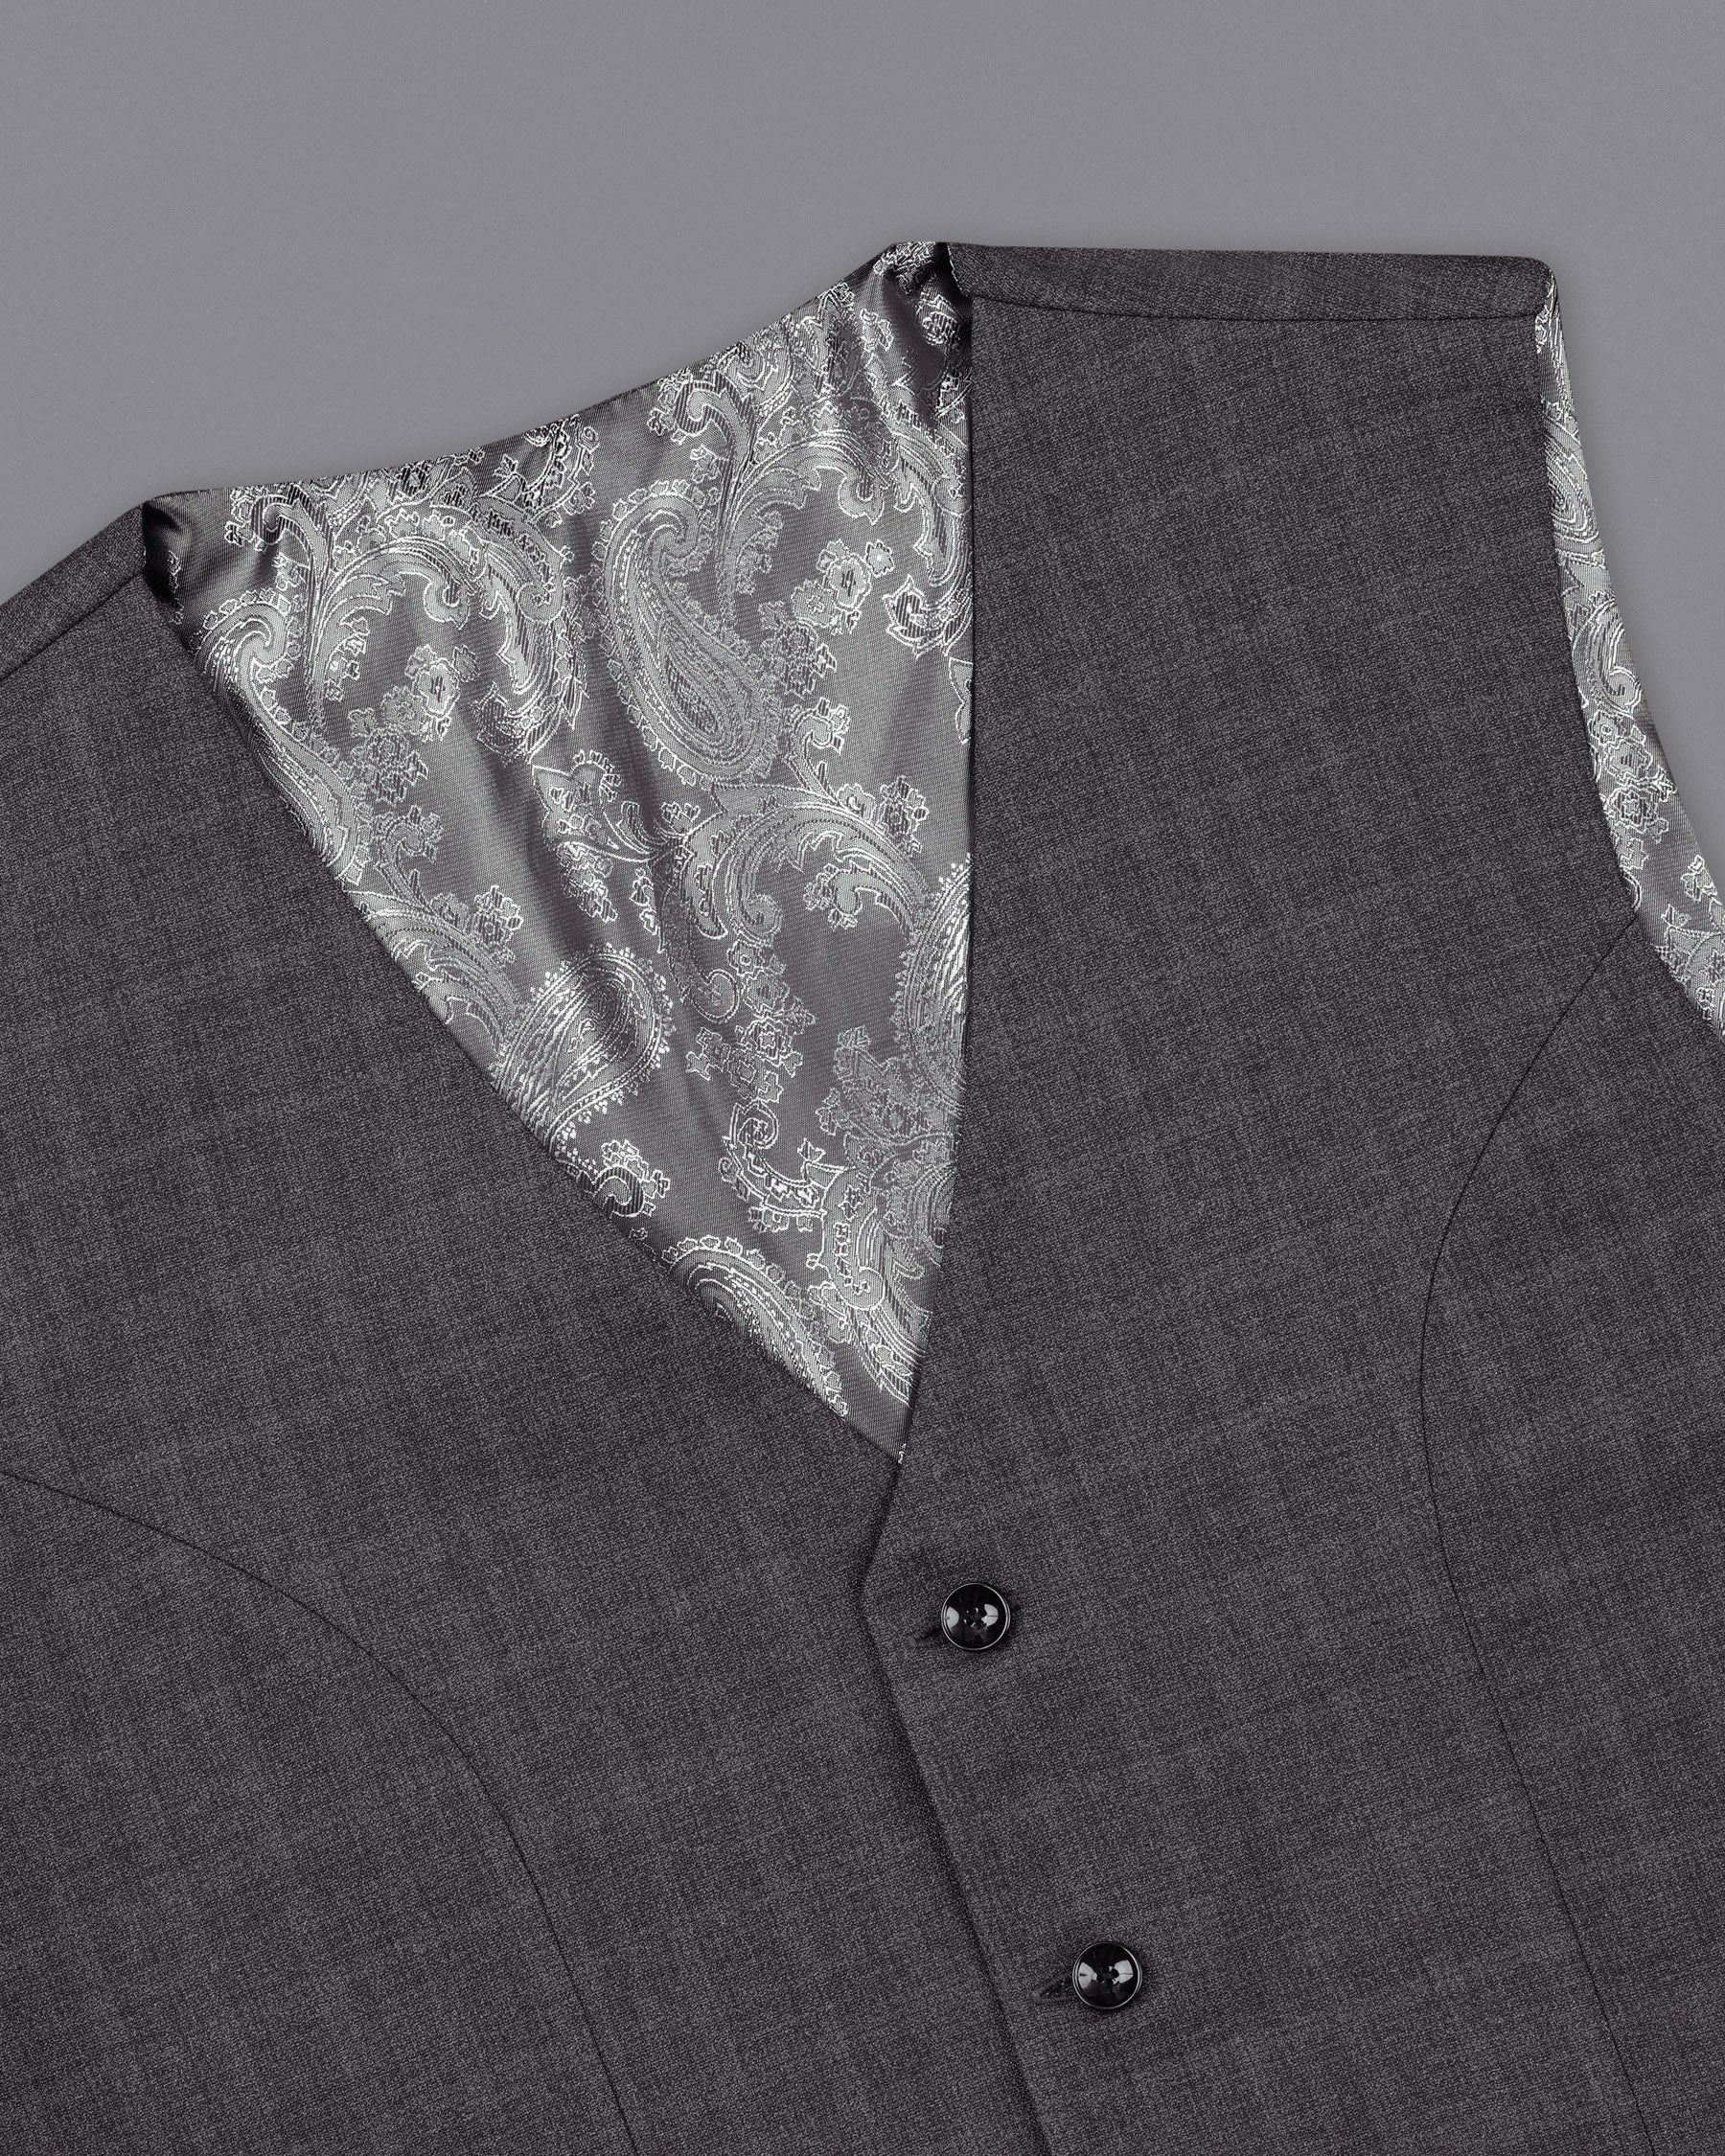 Iridium Gray Double-Breasted Suit